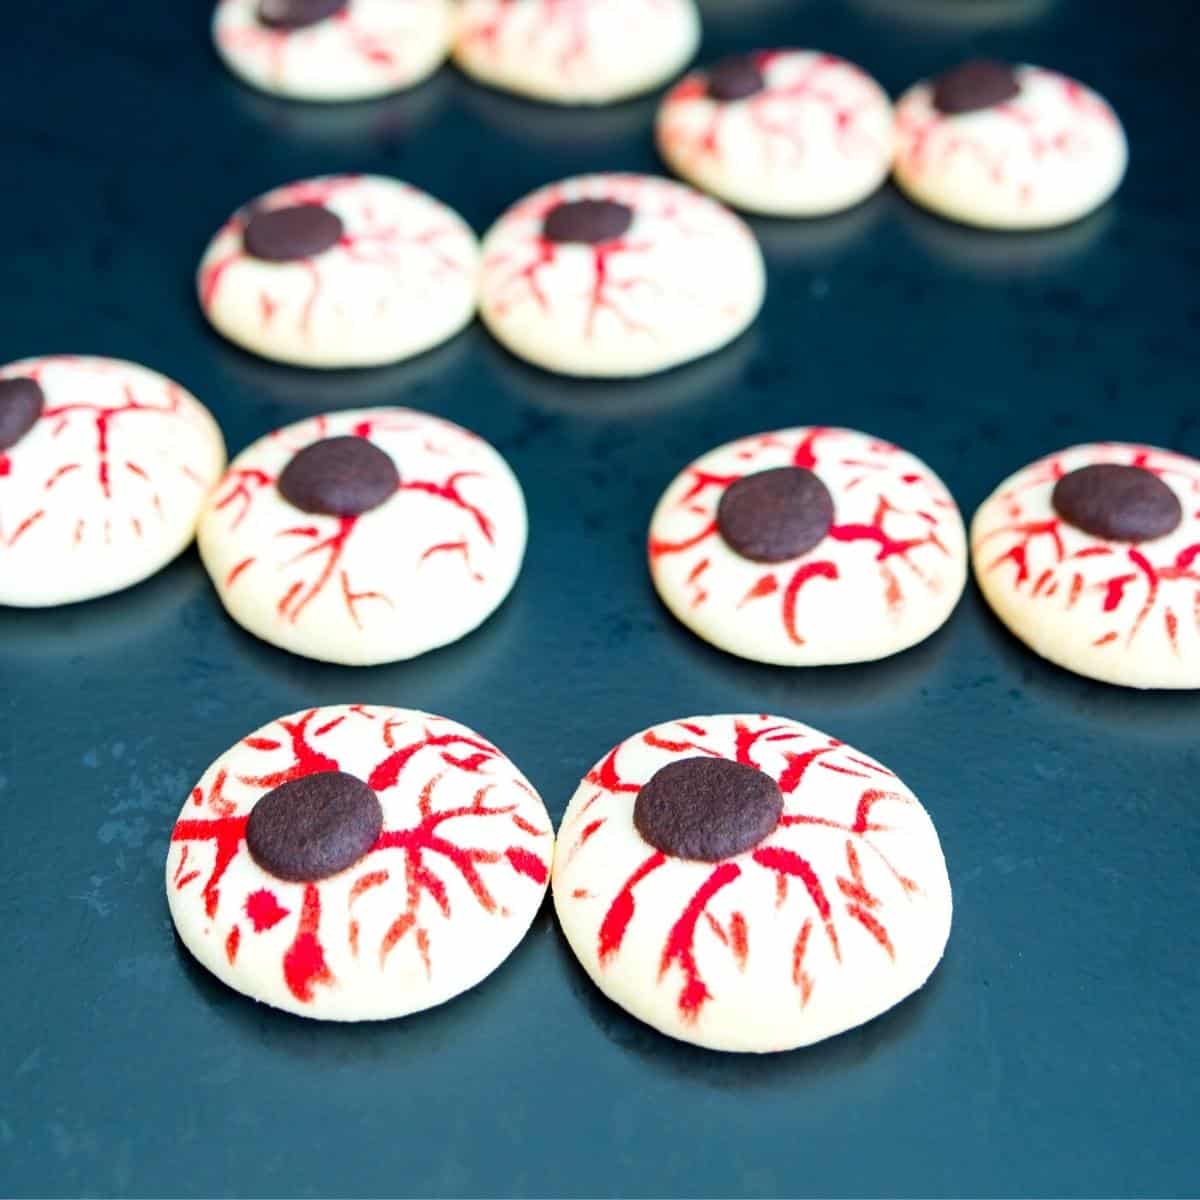 Eyeball cookies on a table.